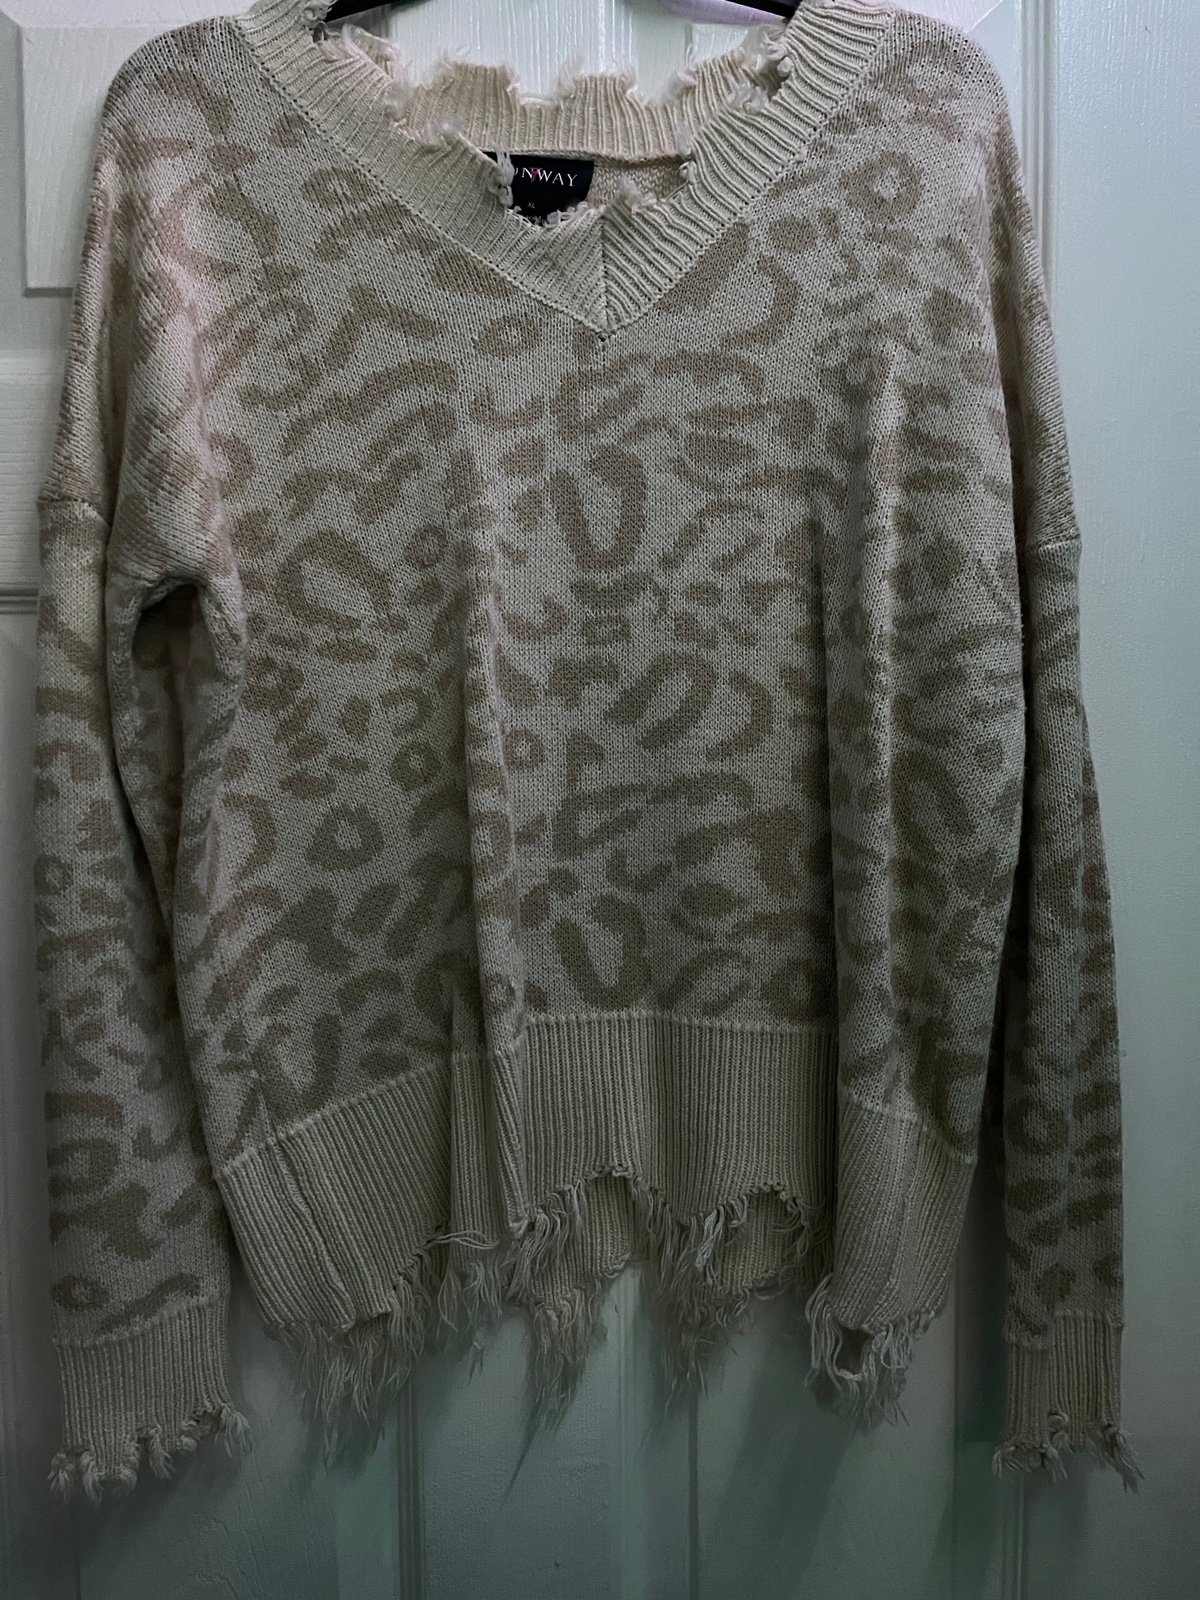 floor price cheetah print Sweater o4TeDm7AJ best sale